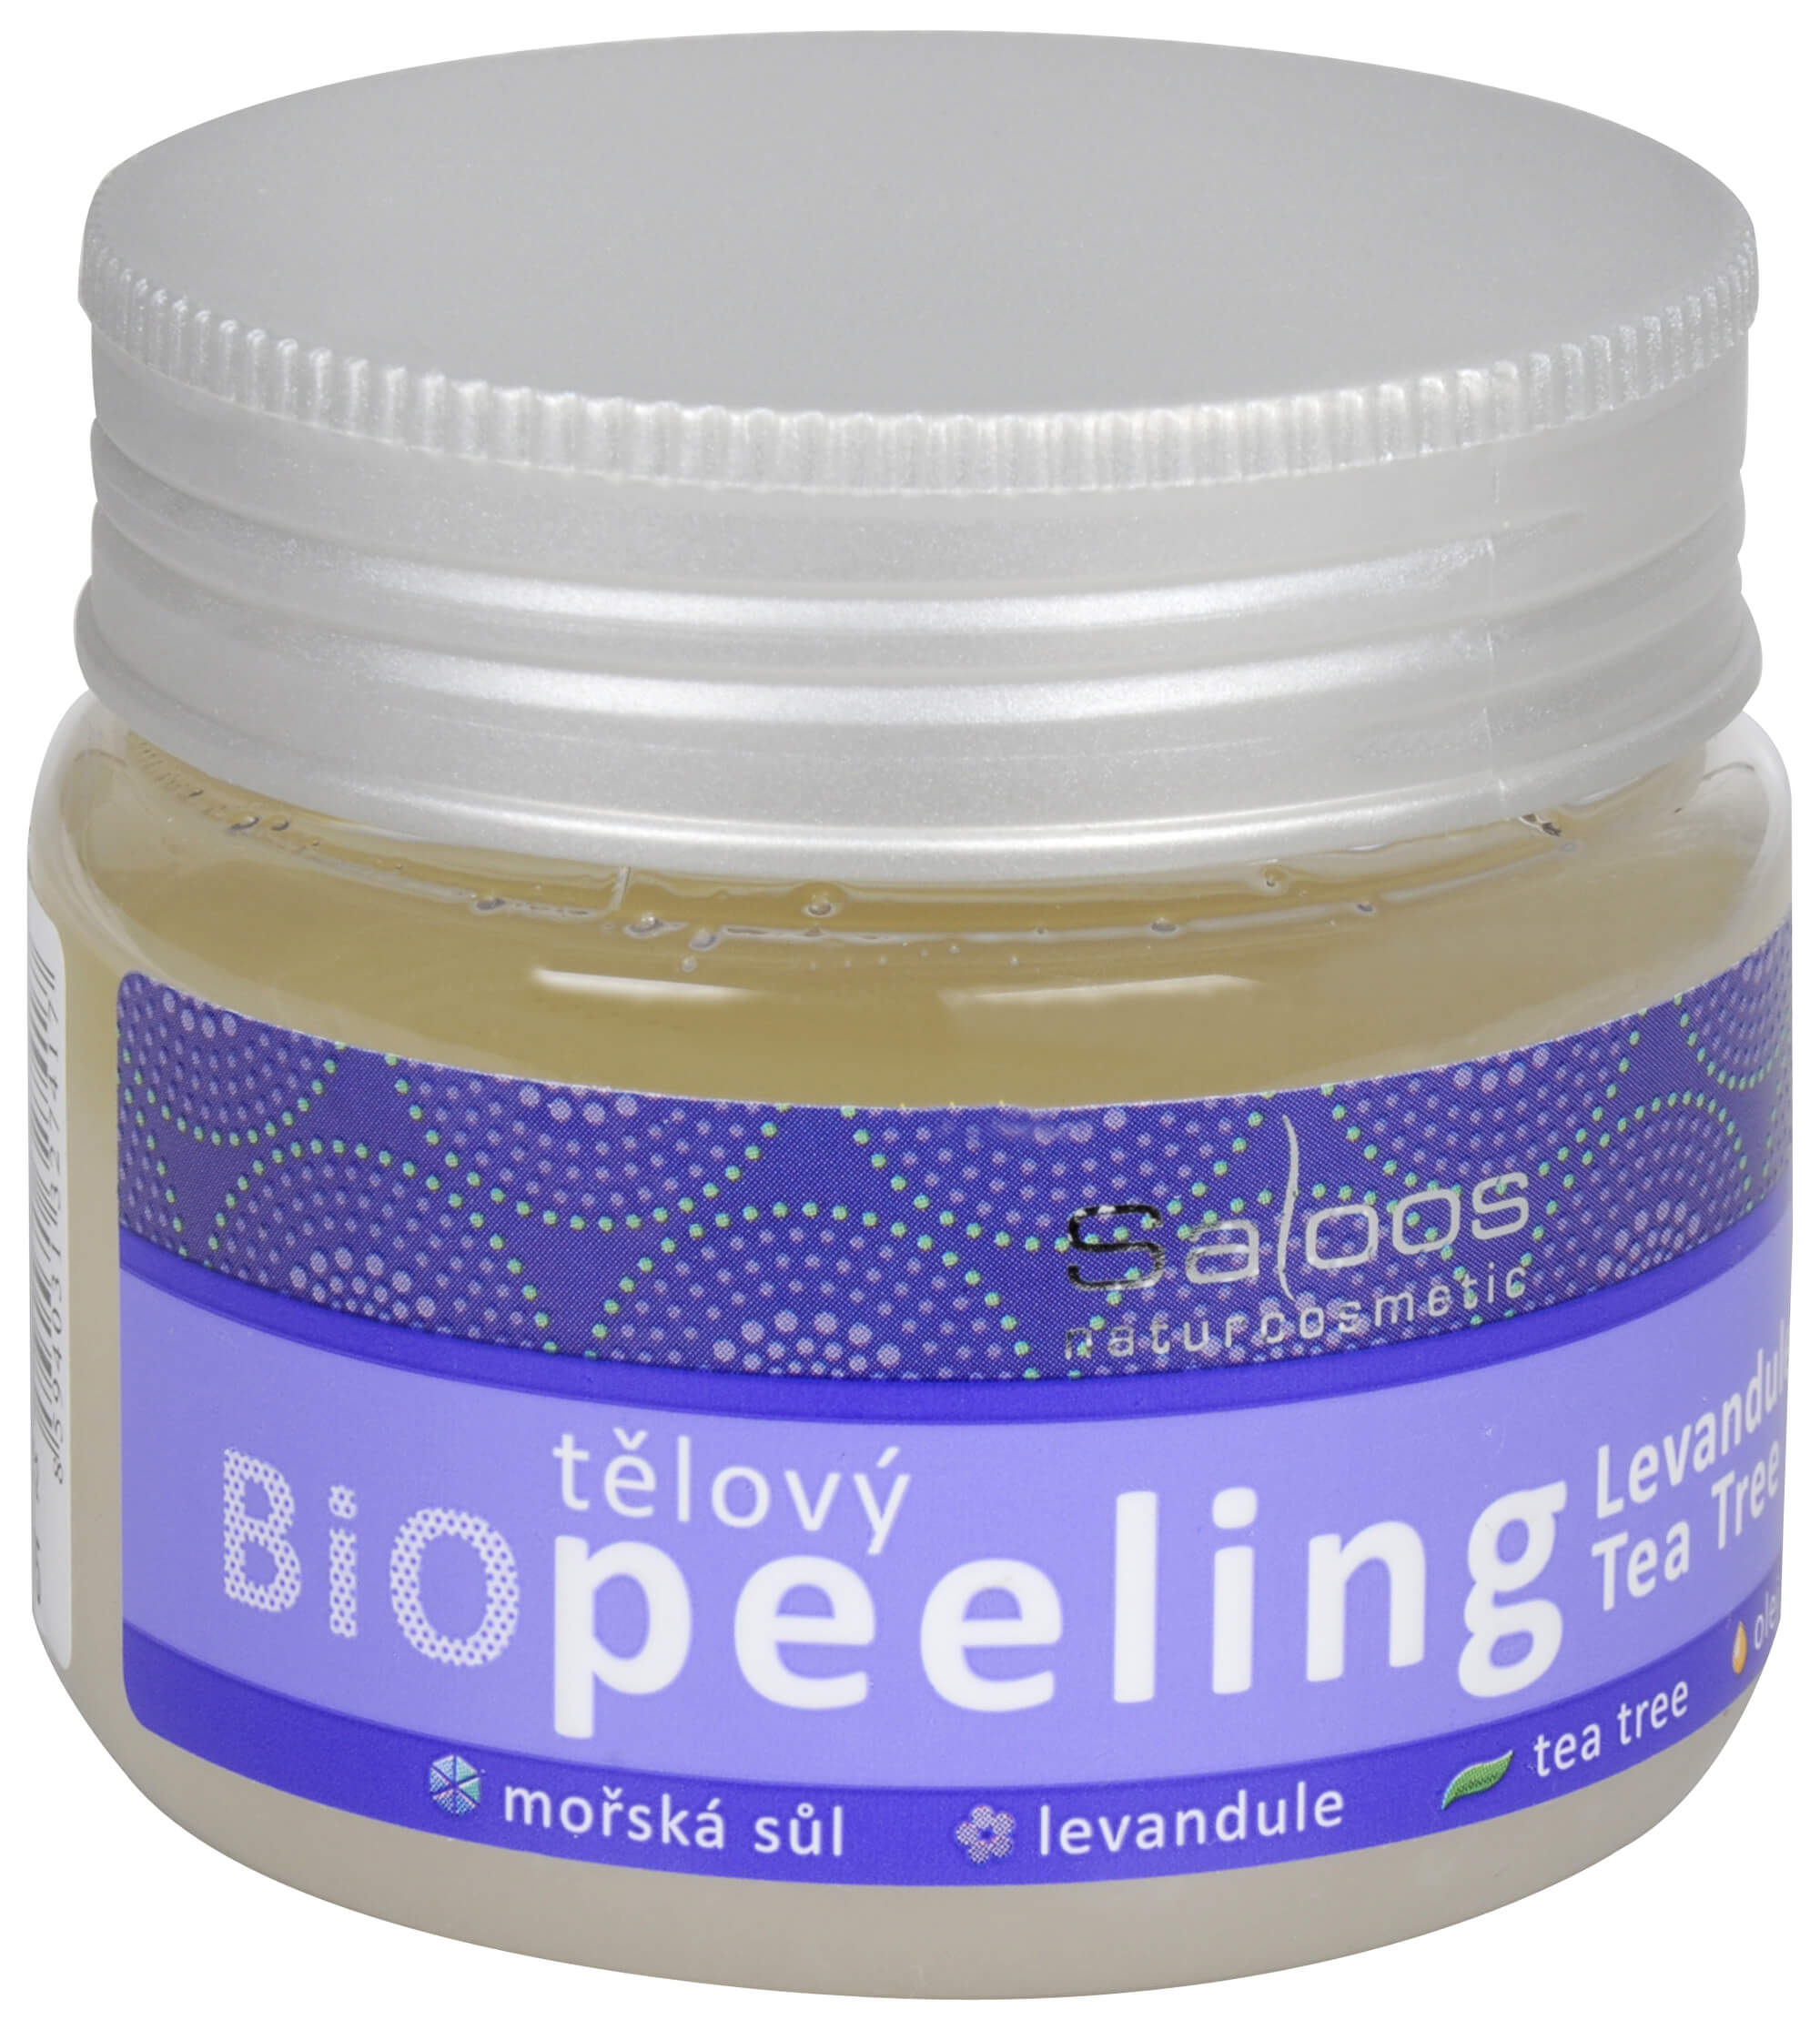 Zobrazit detail výrobku Saloos Bio Tělový peeling - Levandule - Tea tree 140 ml